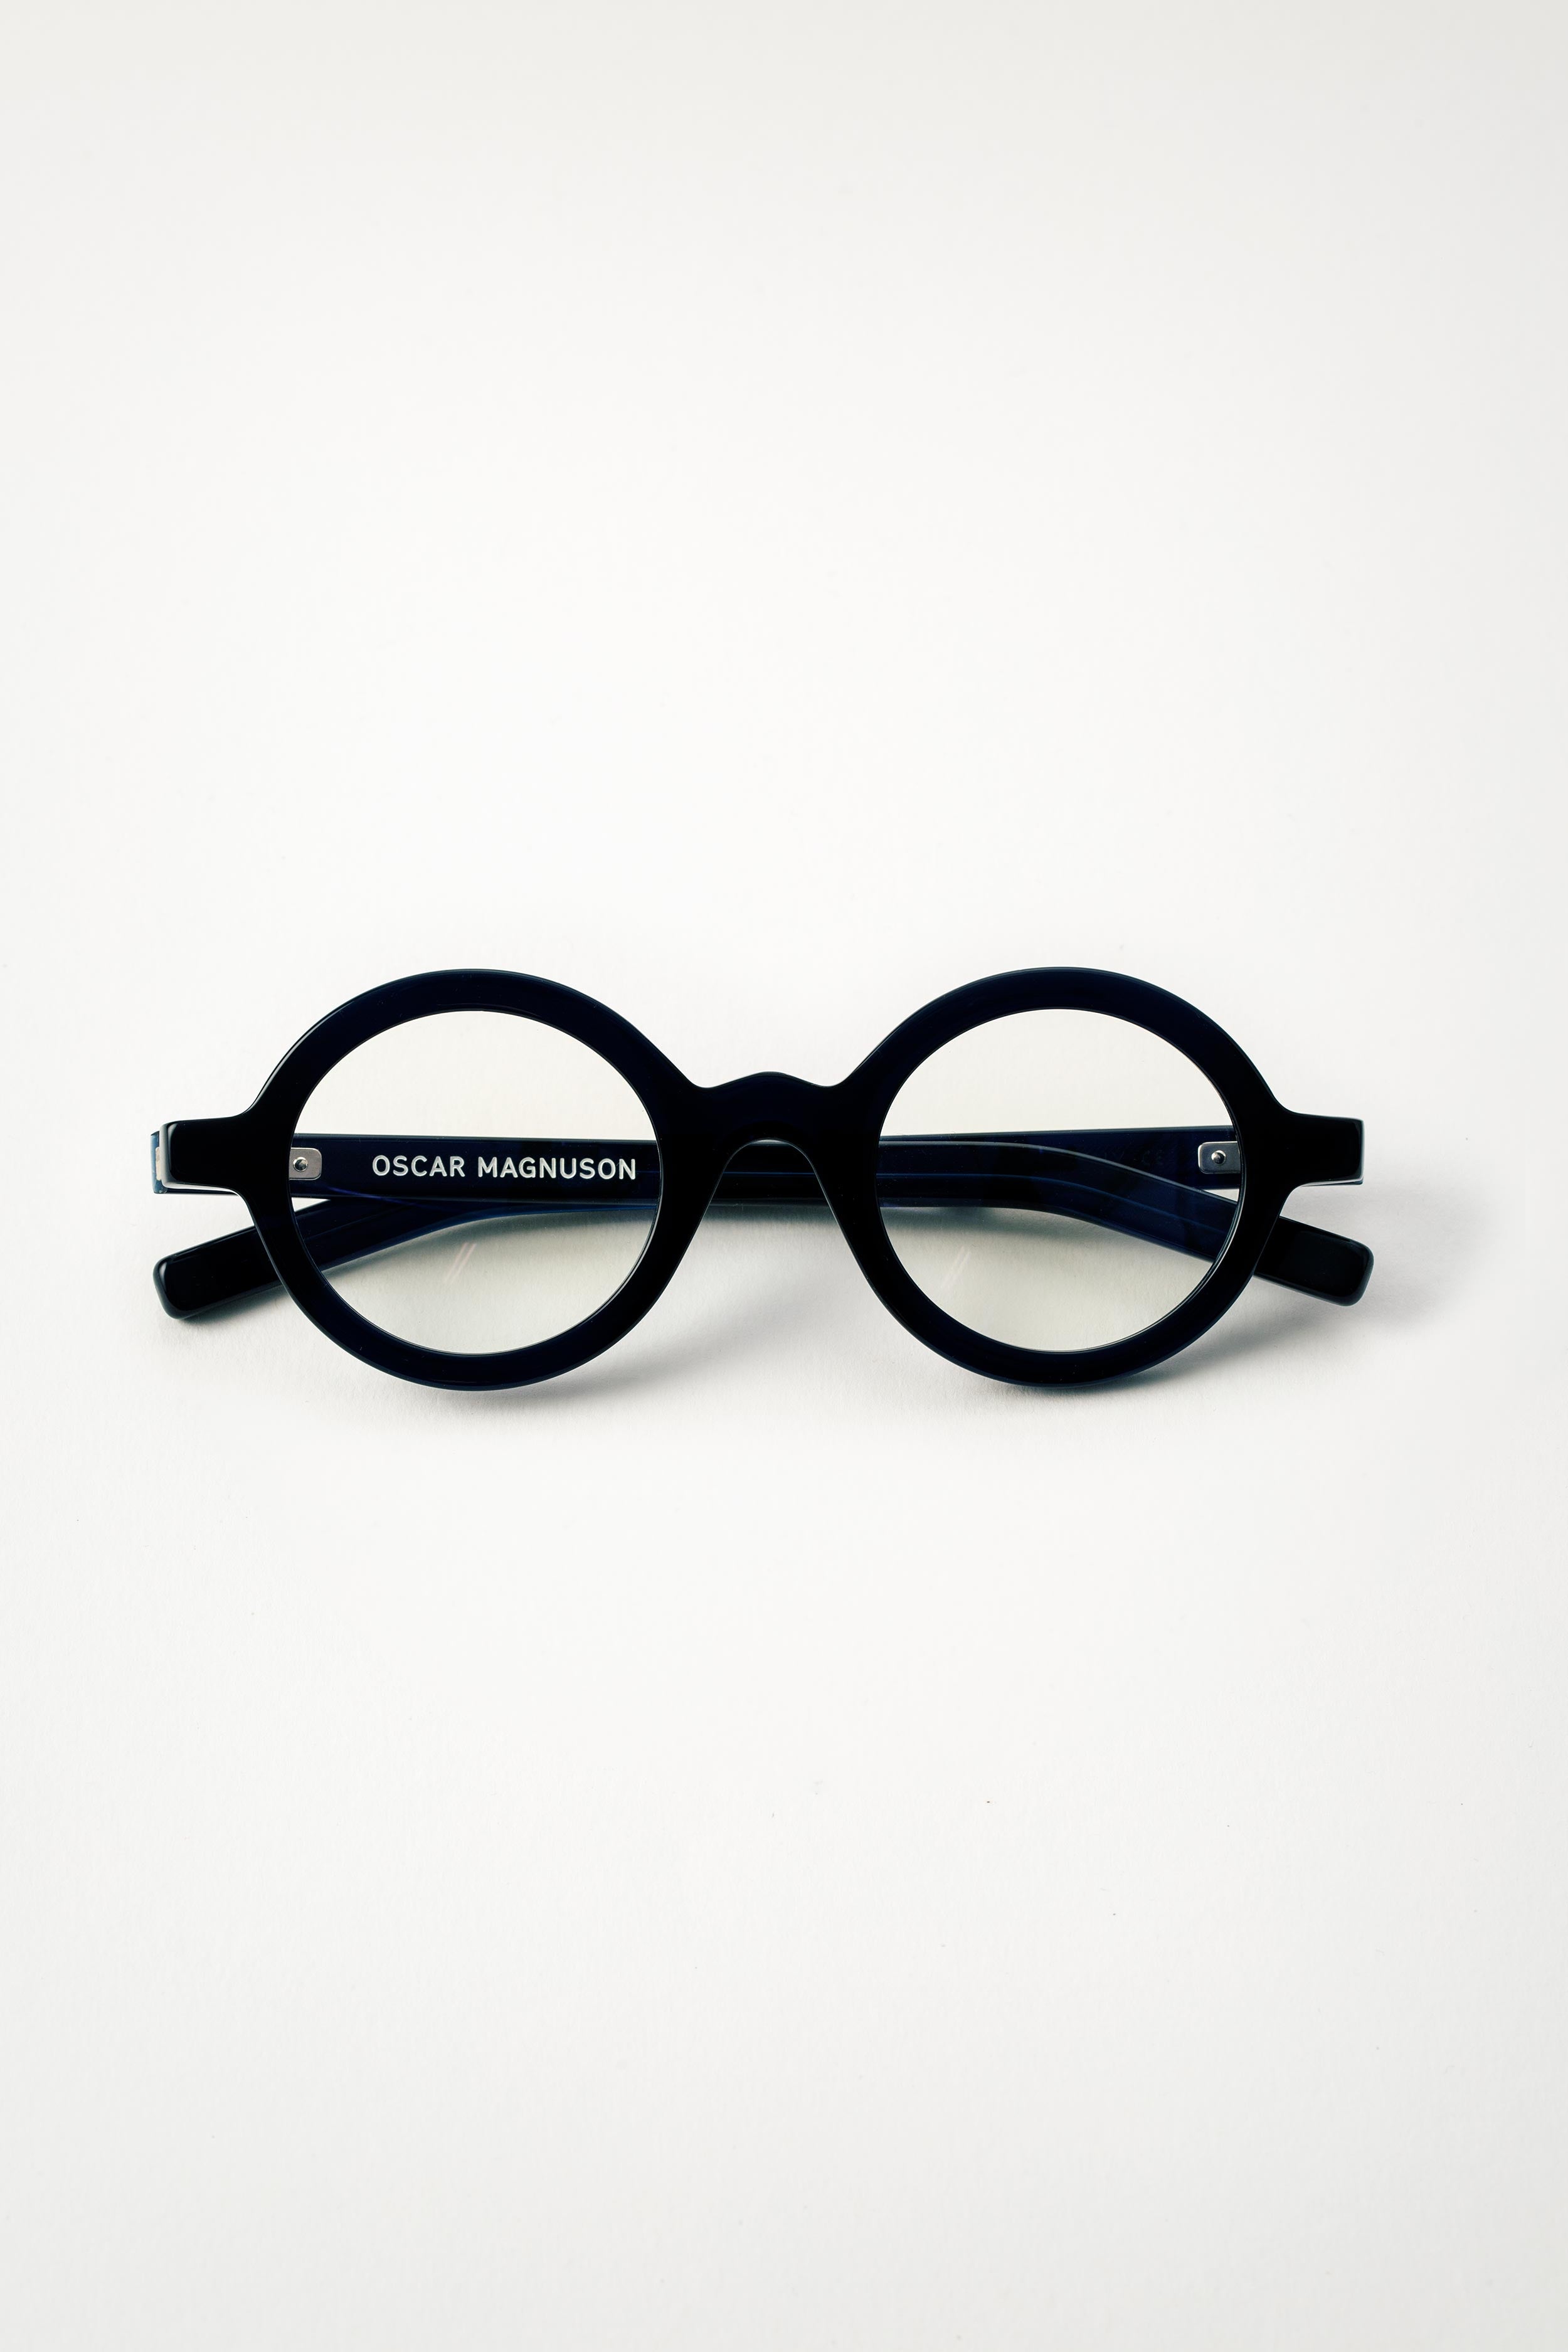 shop eyeglasses – Page 2 – Oscar Magnuson Spectacles